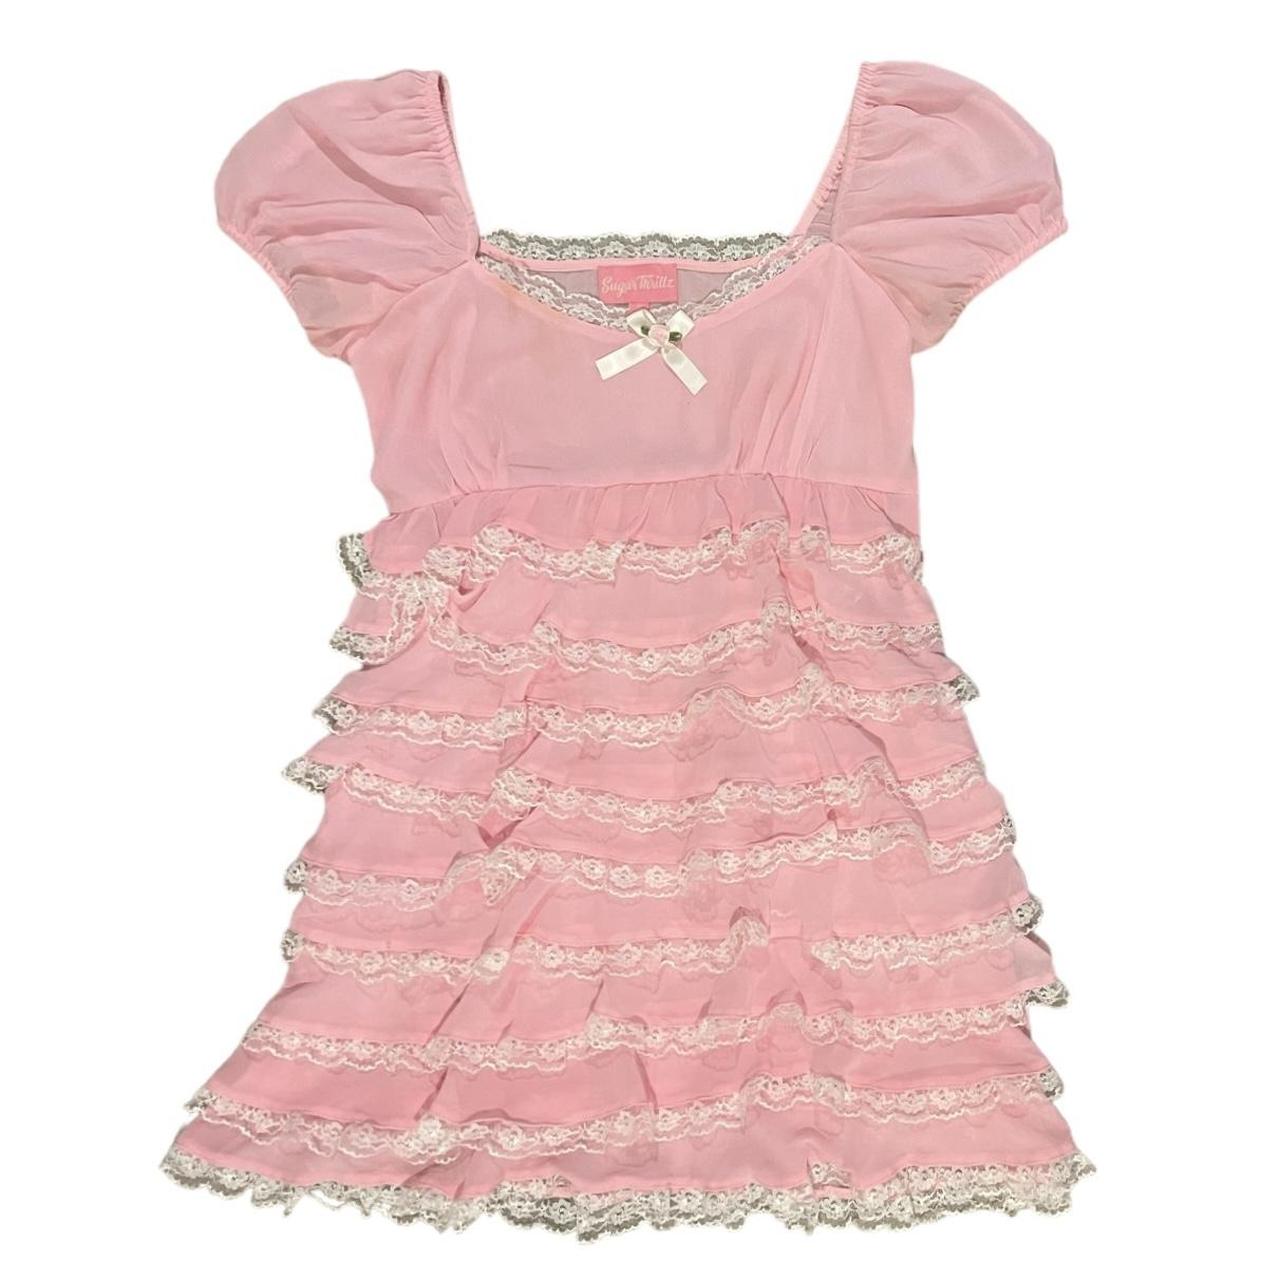 Sugar Thrillz mini dress pink with white lace trim... - Depop